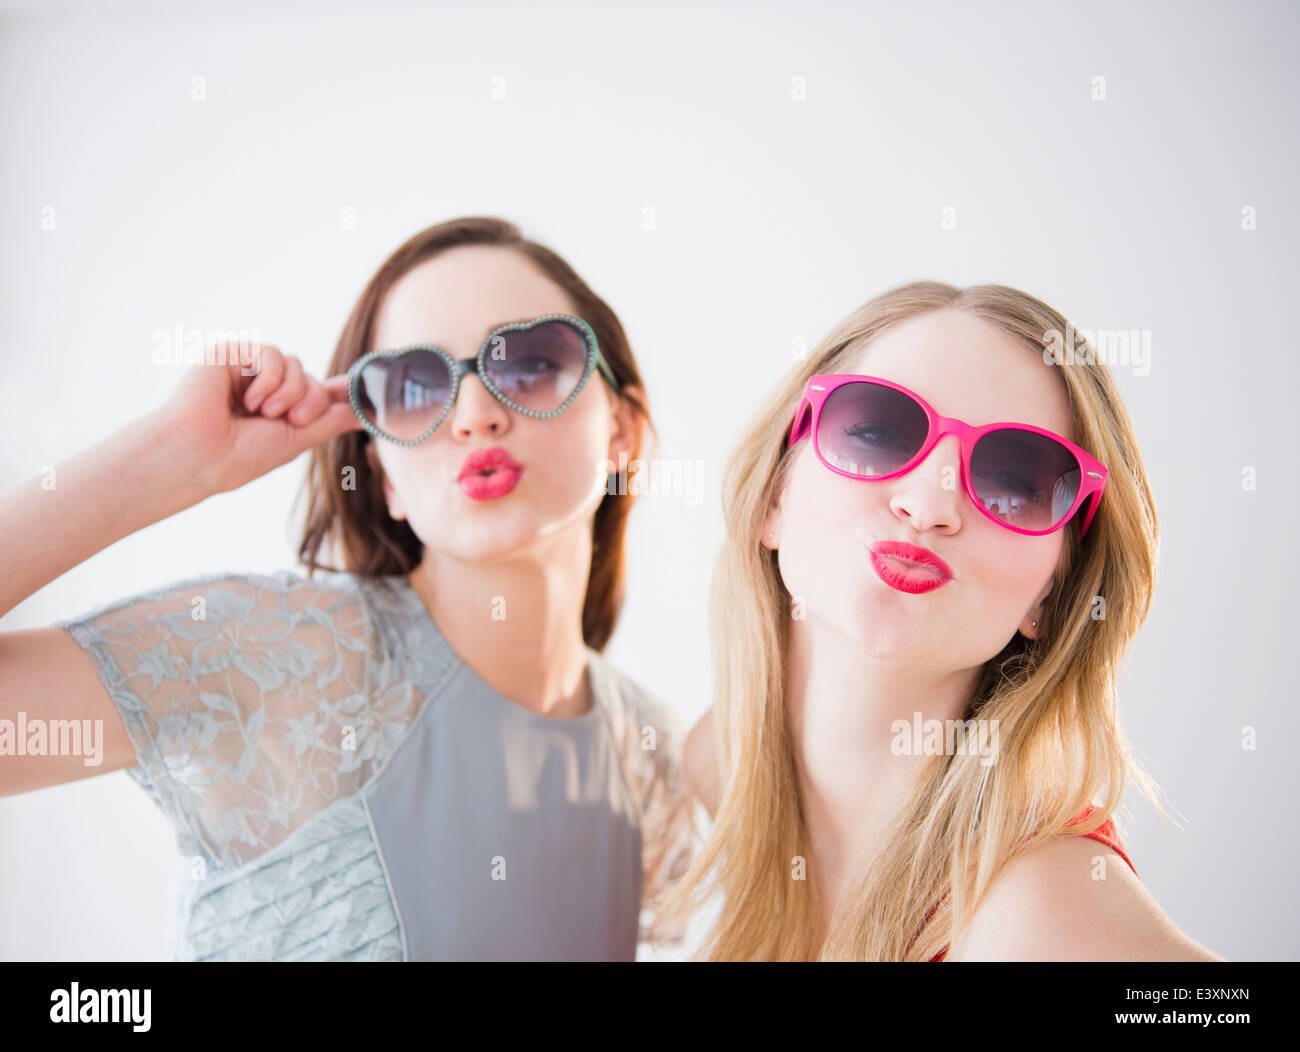 Women wearing colorful sunglasses and lipstick Stock Photo